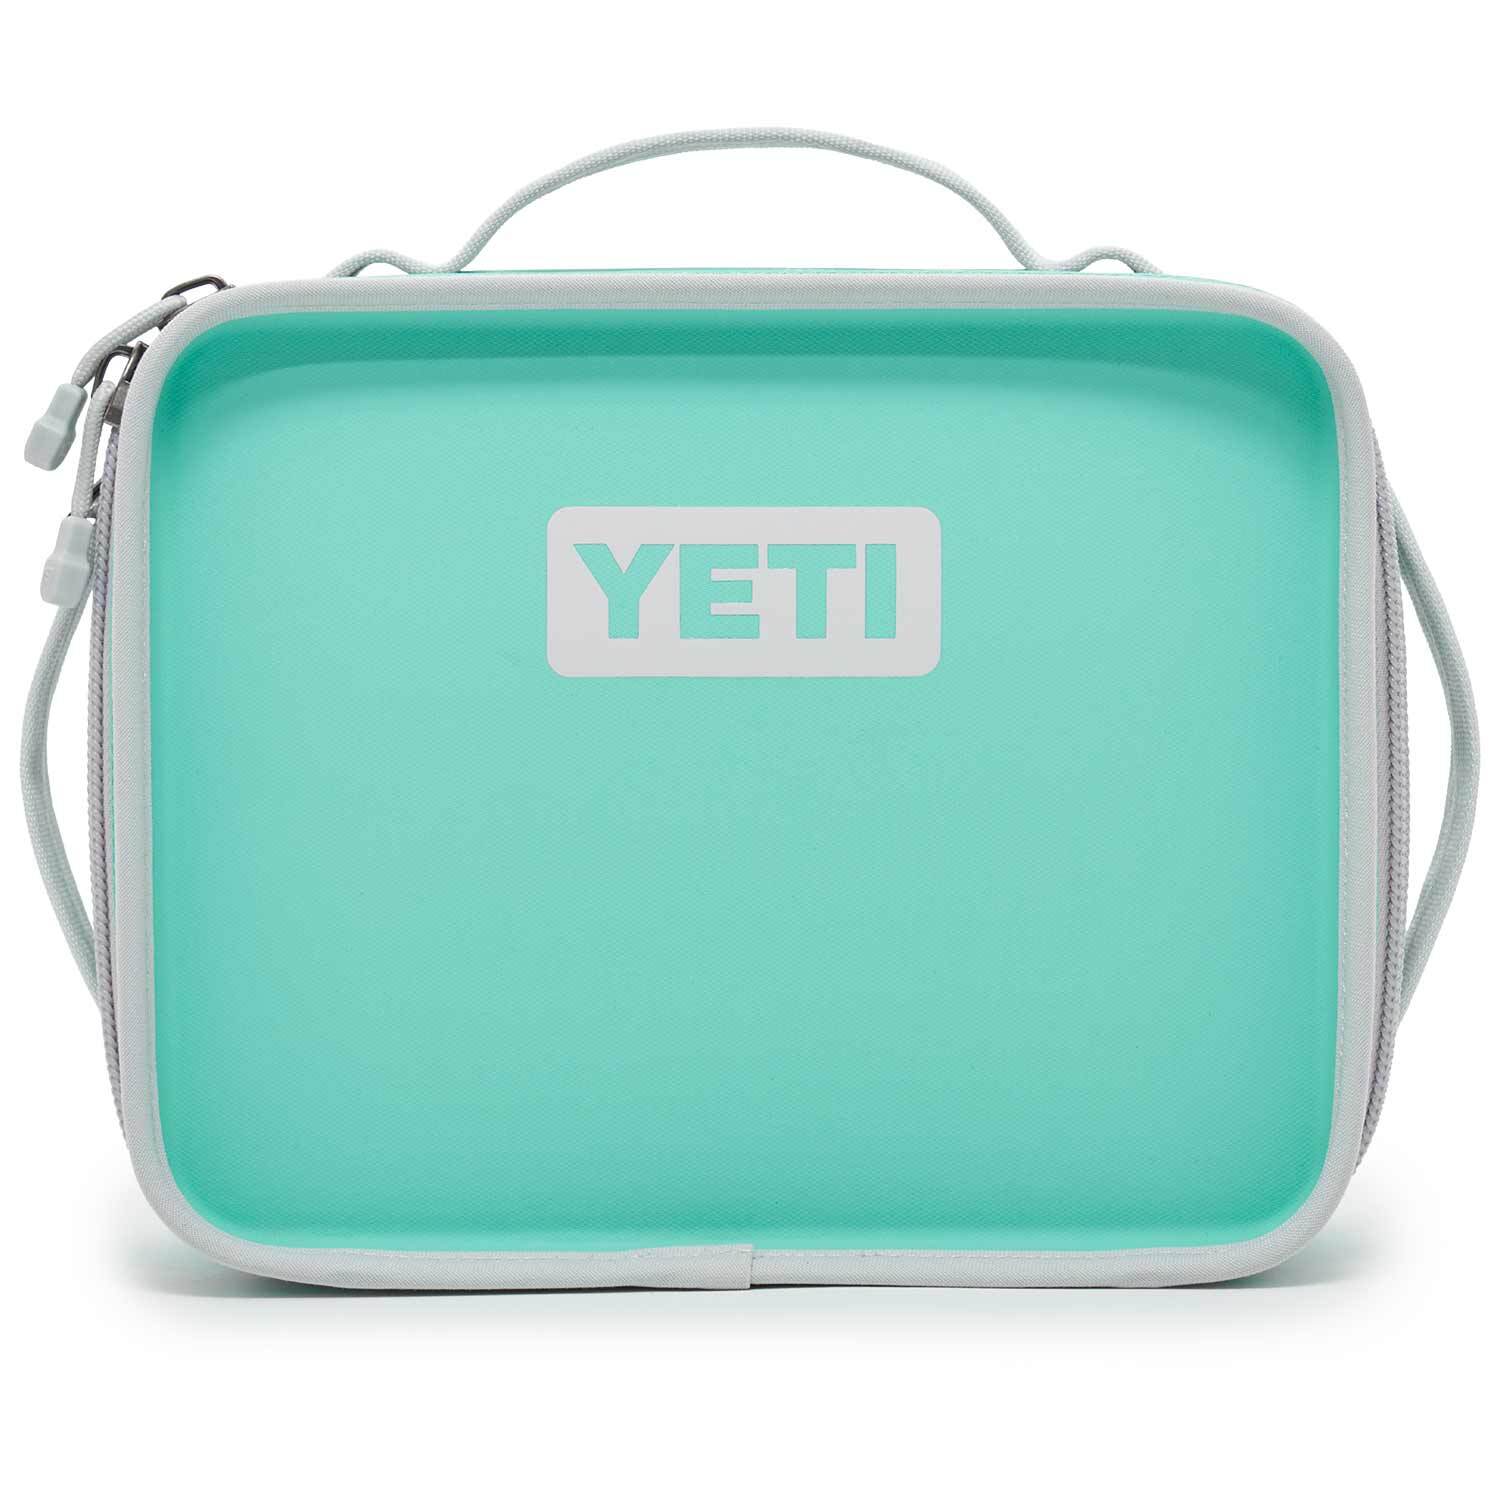 YETI / Daytrip Lunch Box - Navy